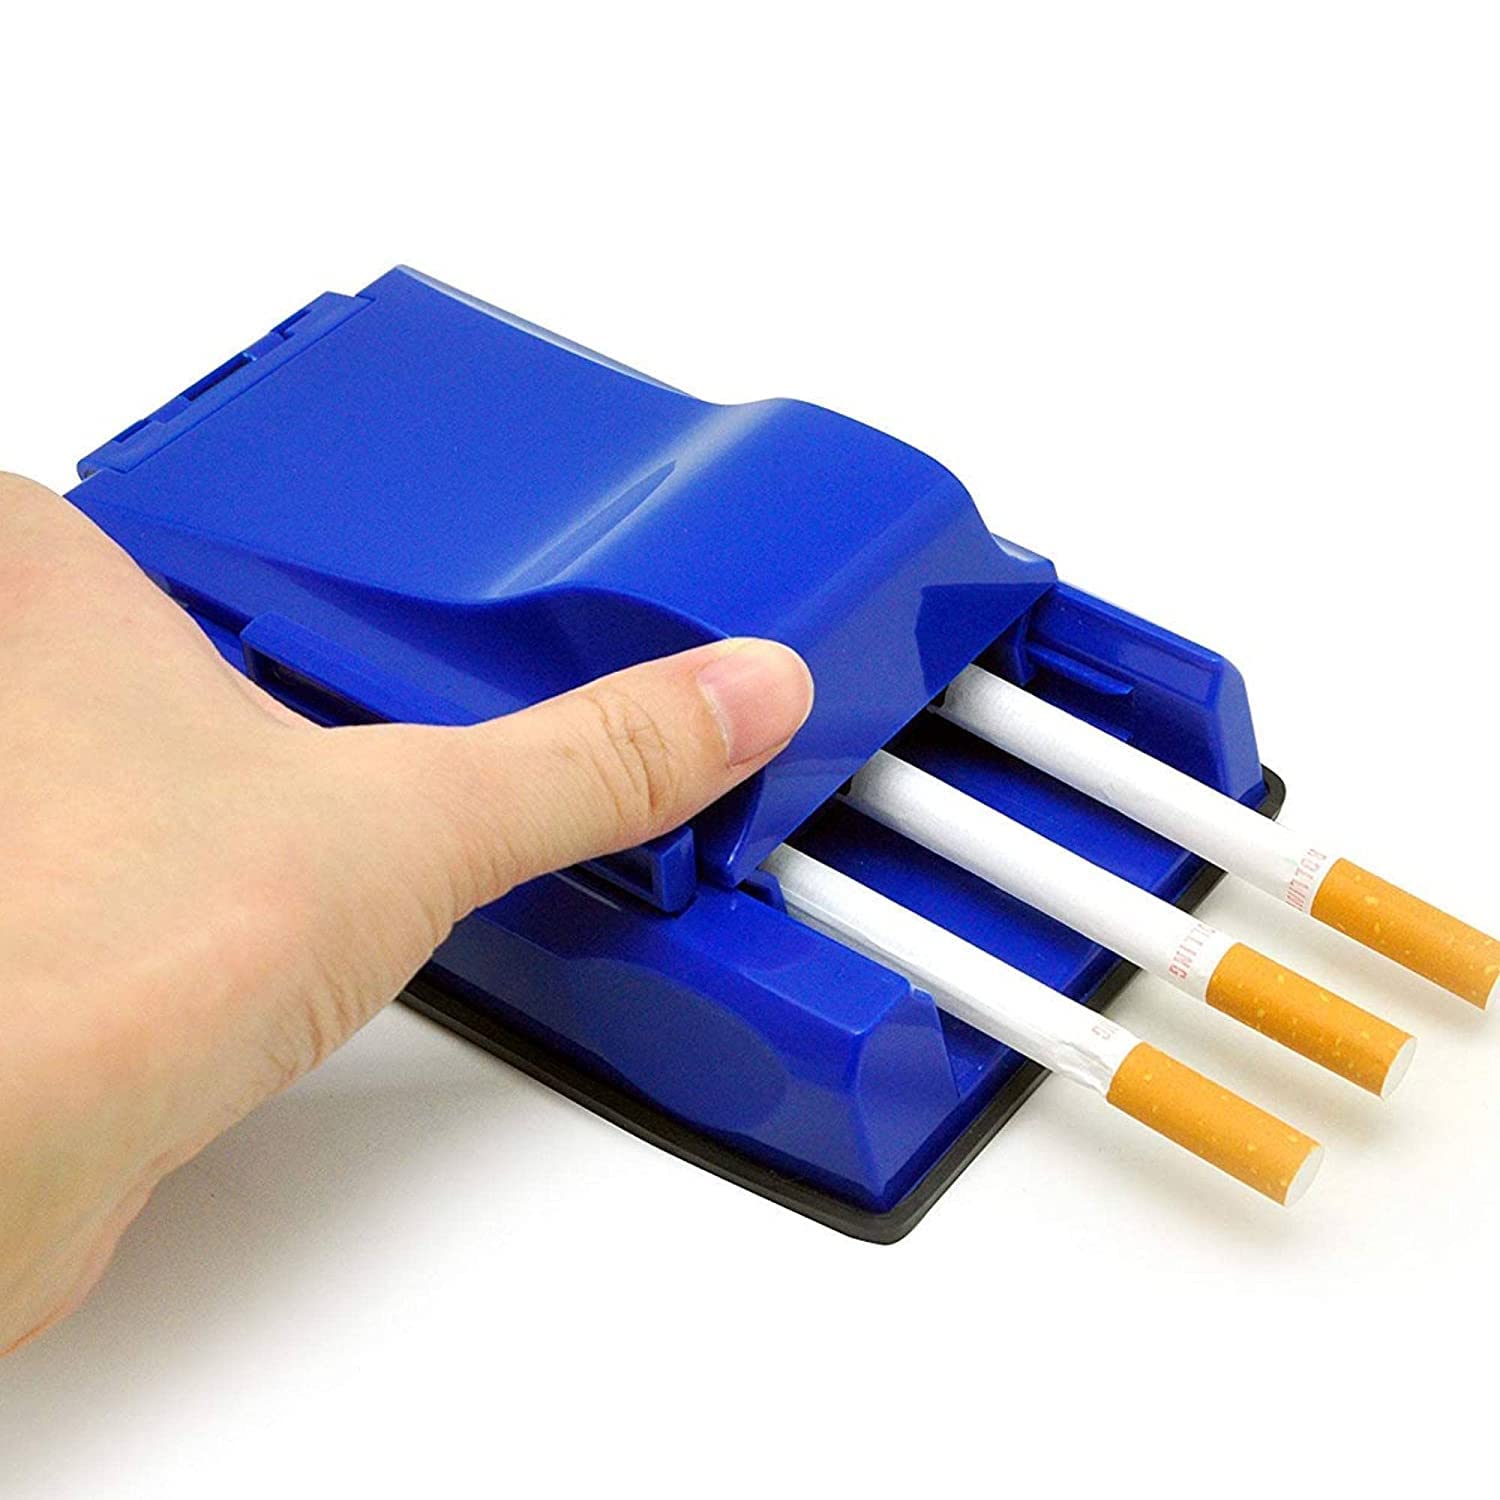 Triple or 3 Cigarette Tube Filling Injector Machine(Manual)